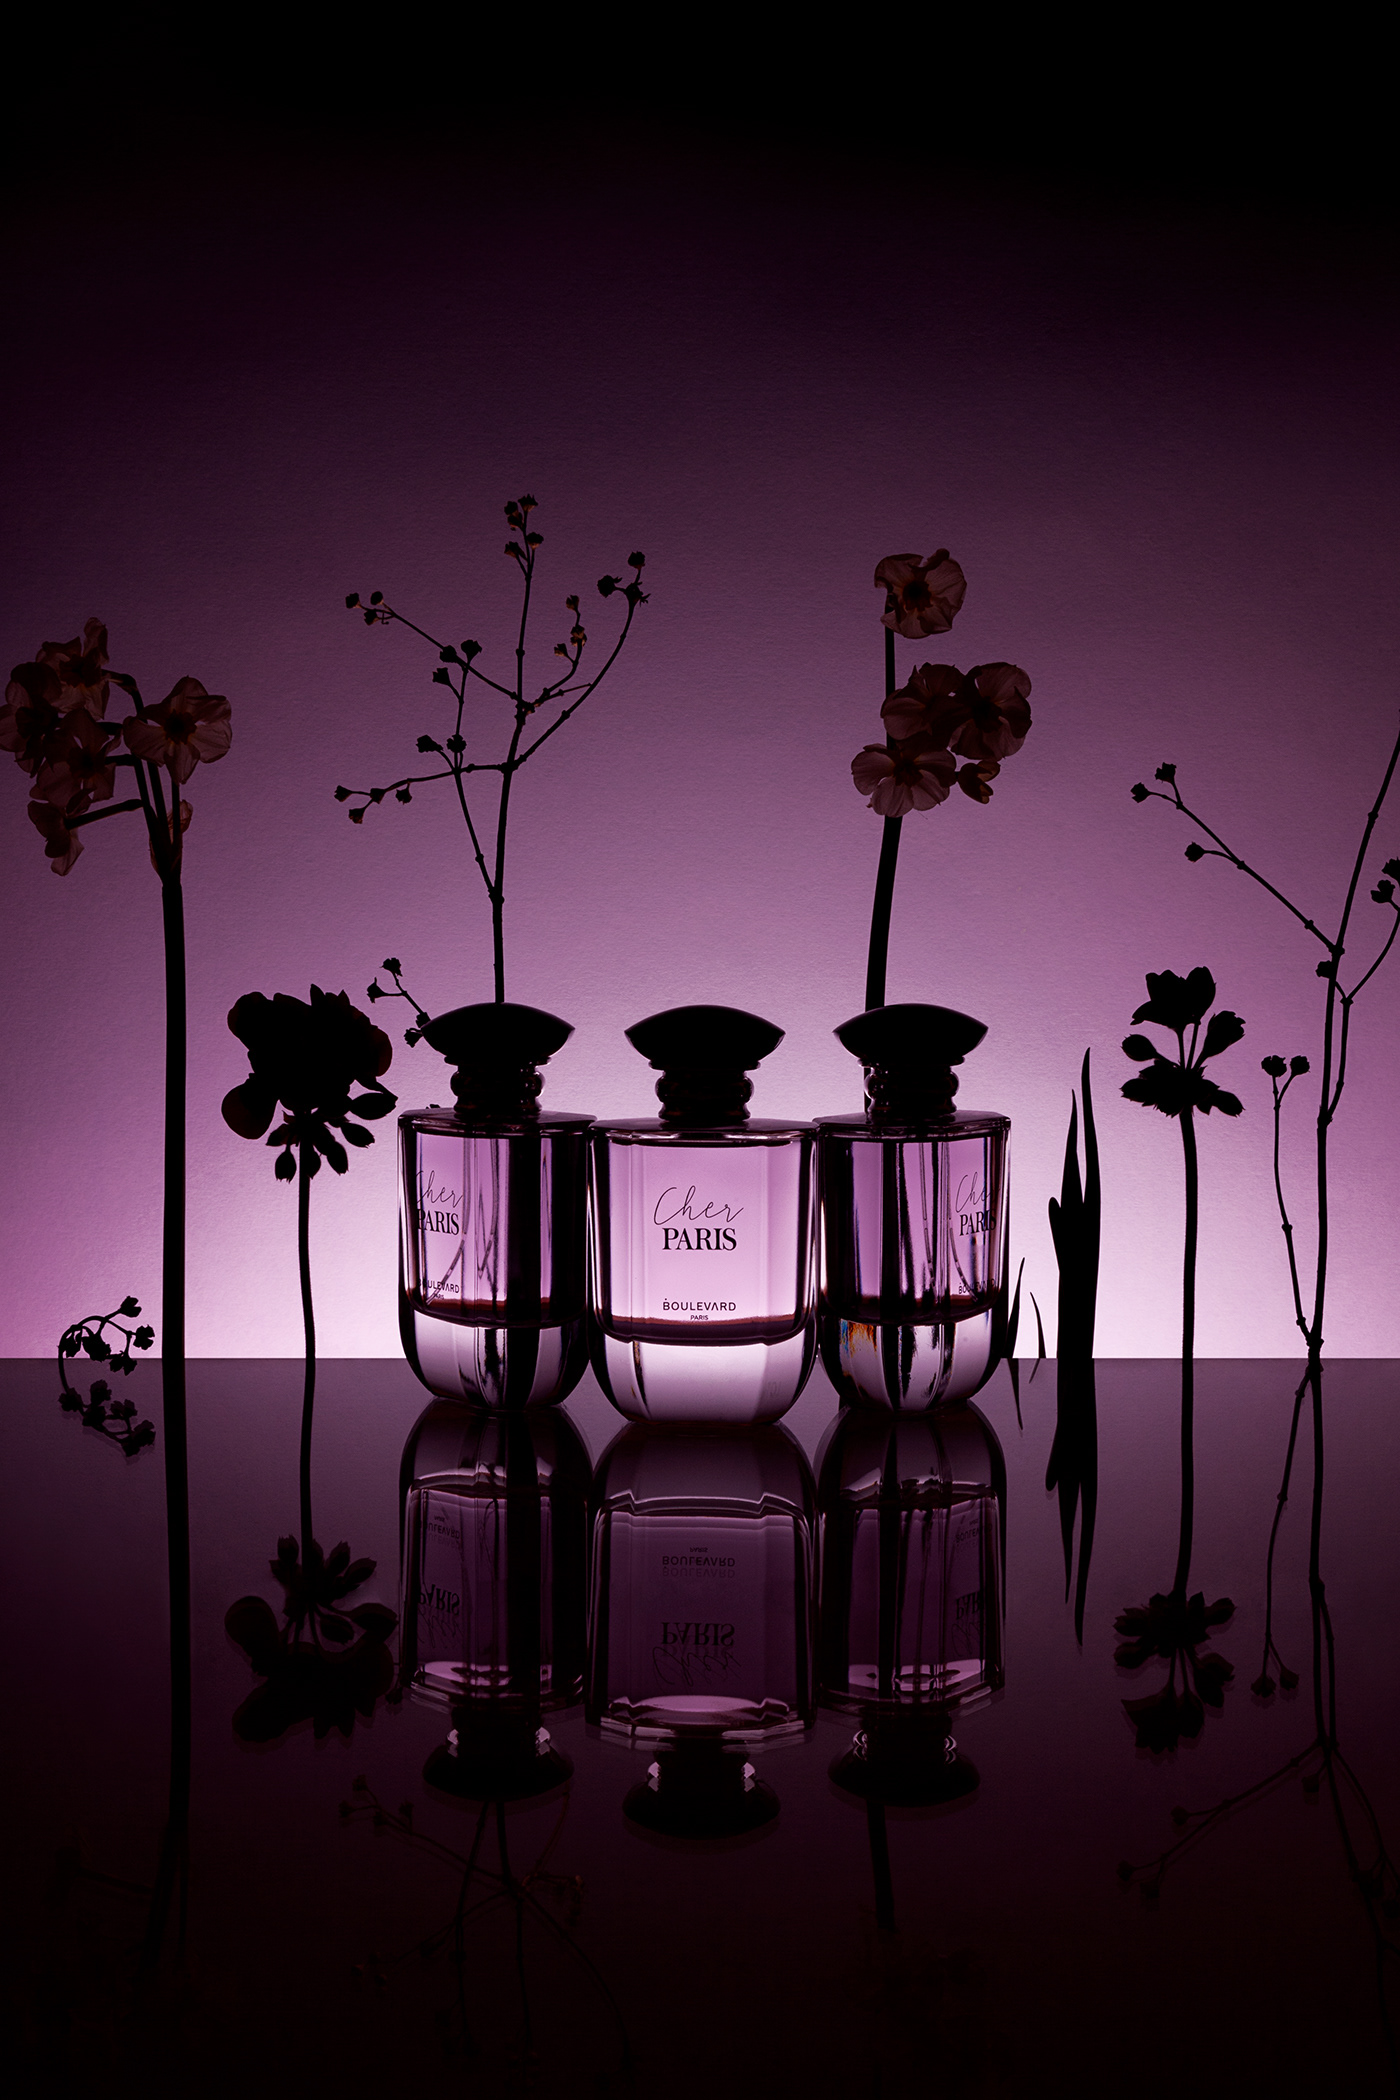 beauty Cosmetic Flowers Fragrance Paris perfume still life art direction  luxury